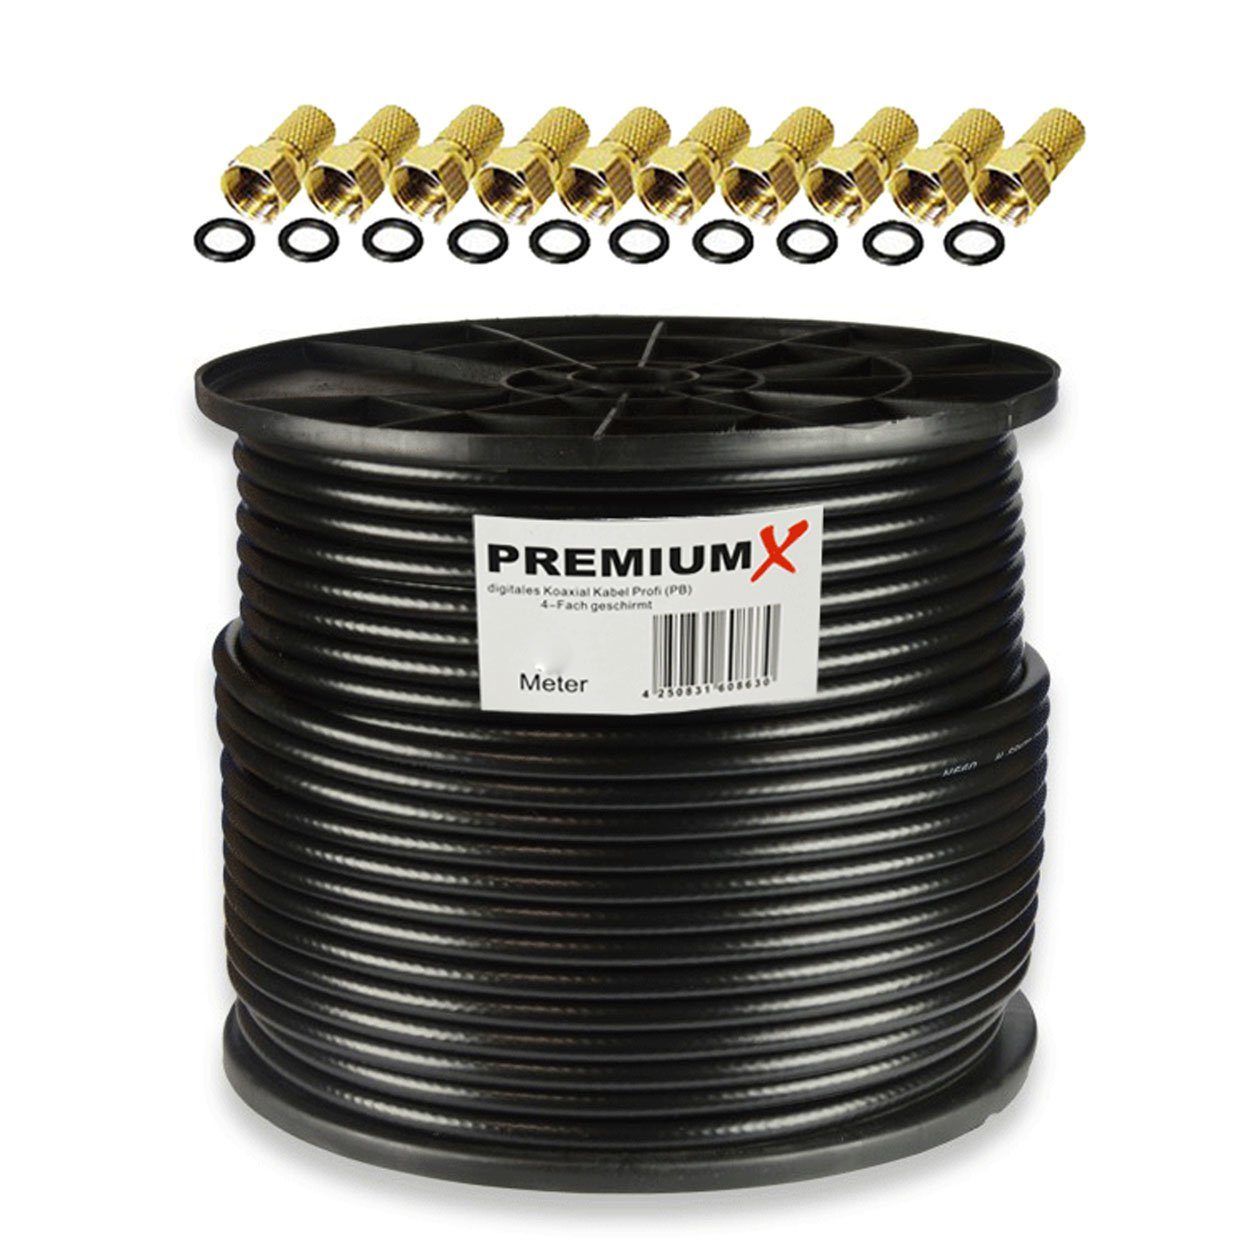 PremiumX 100m PROFI Koaxialkabel Schwarz 135dB F-Stecker 10x KUPFER 4-fach SAT-Kabel